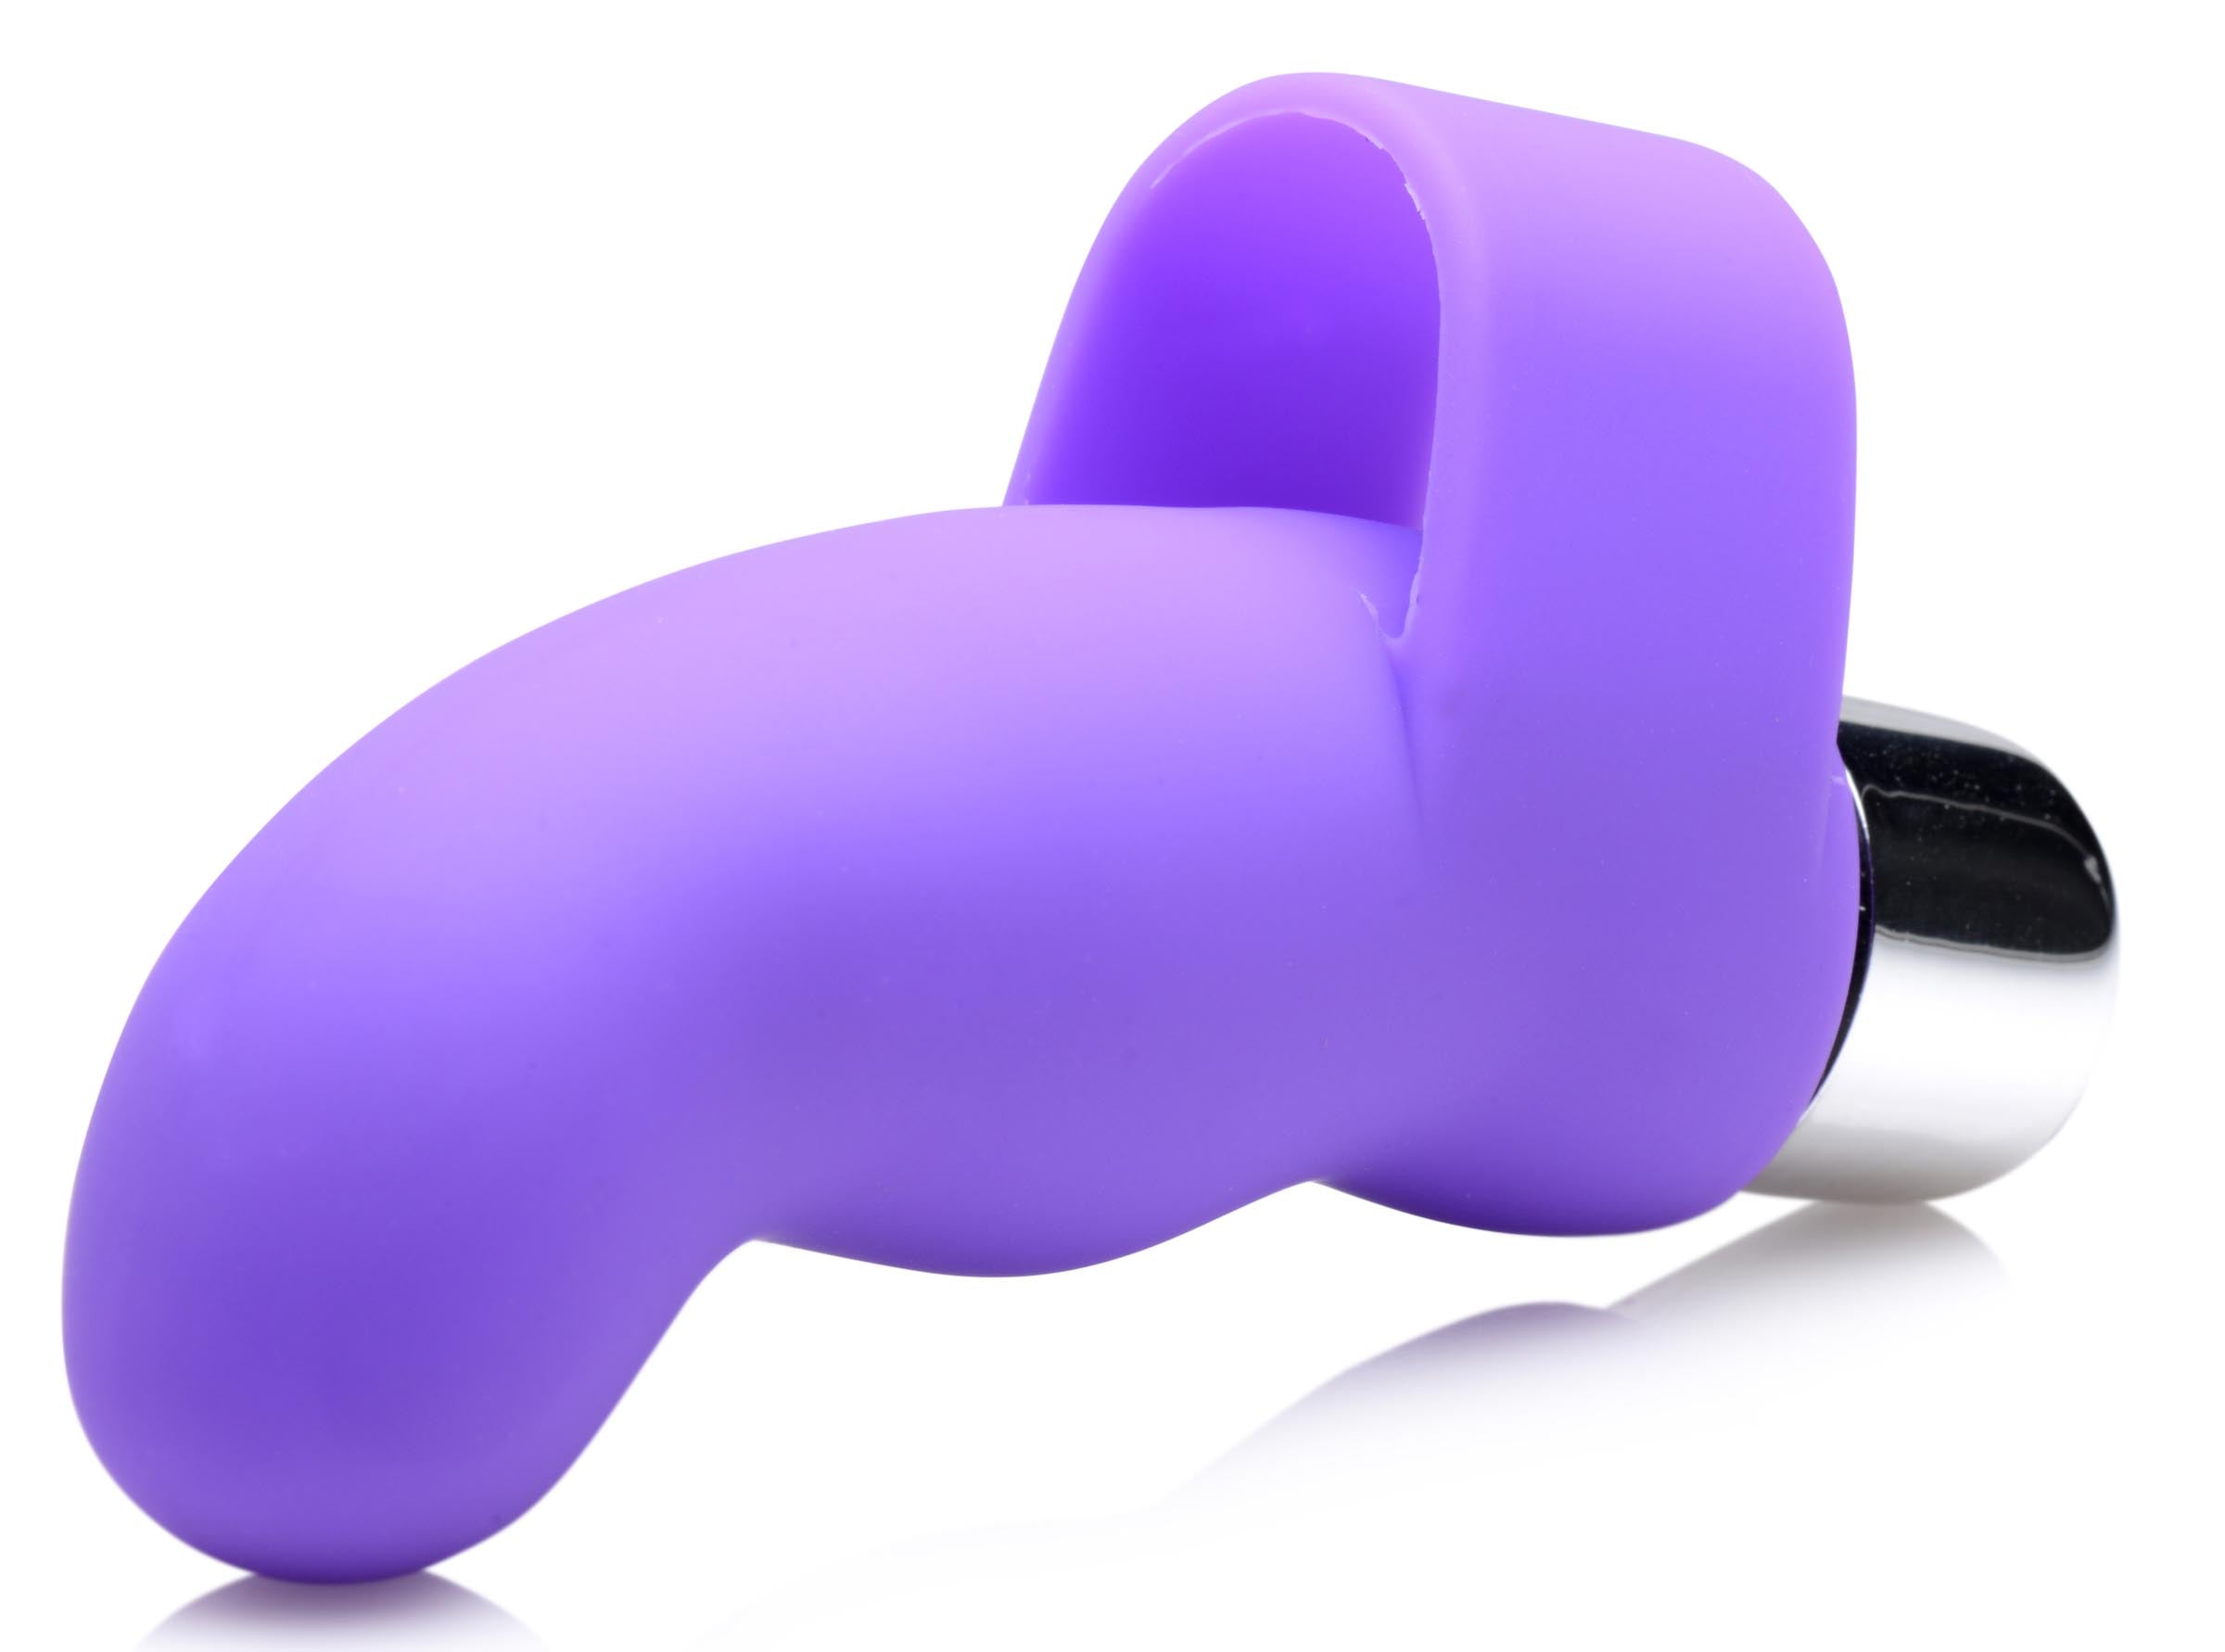 G-Thrill Silicone Finger Vibe - Purple